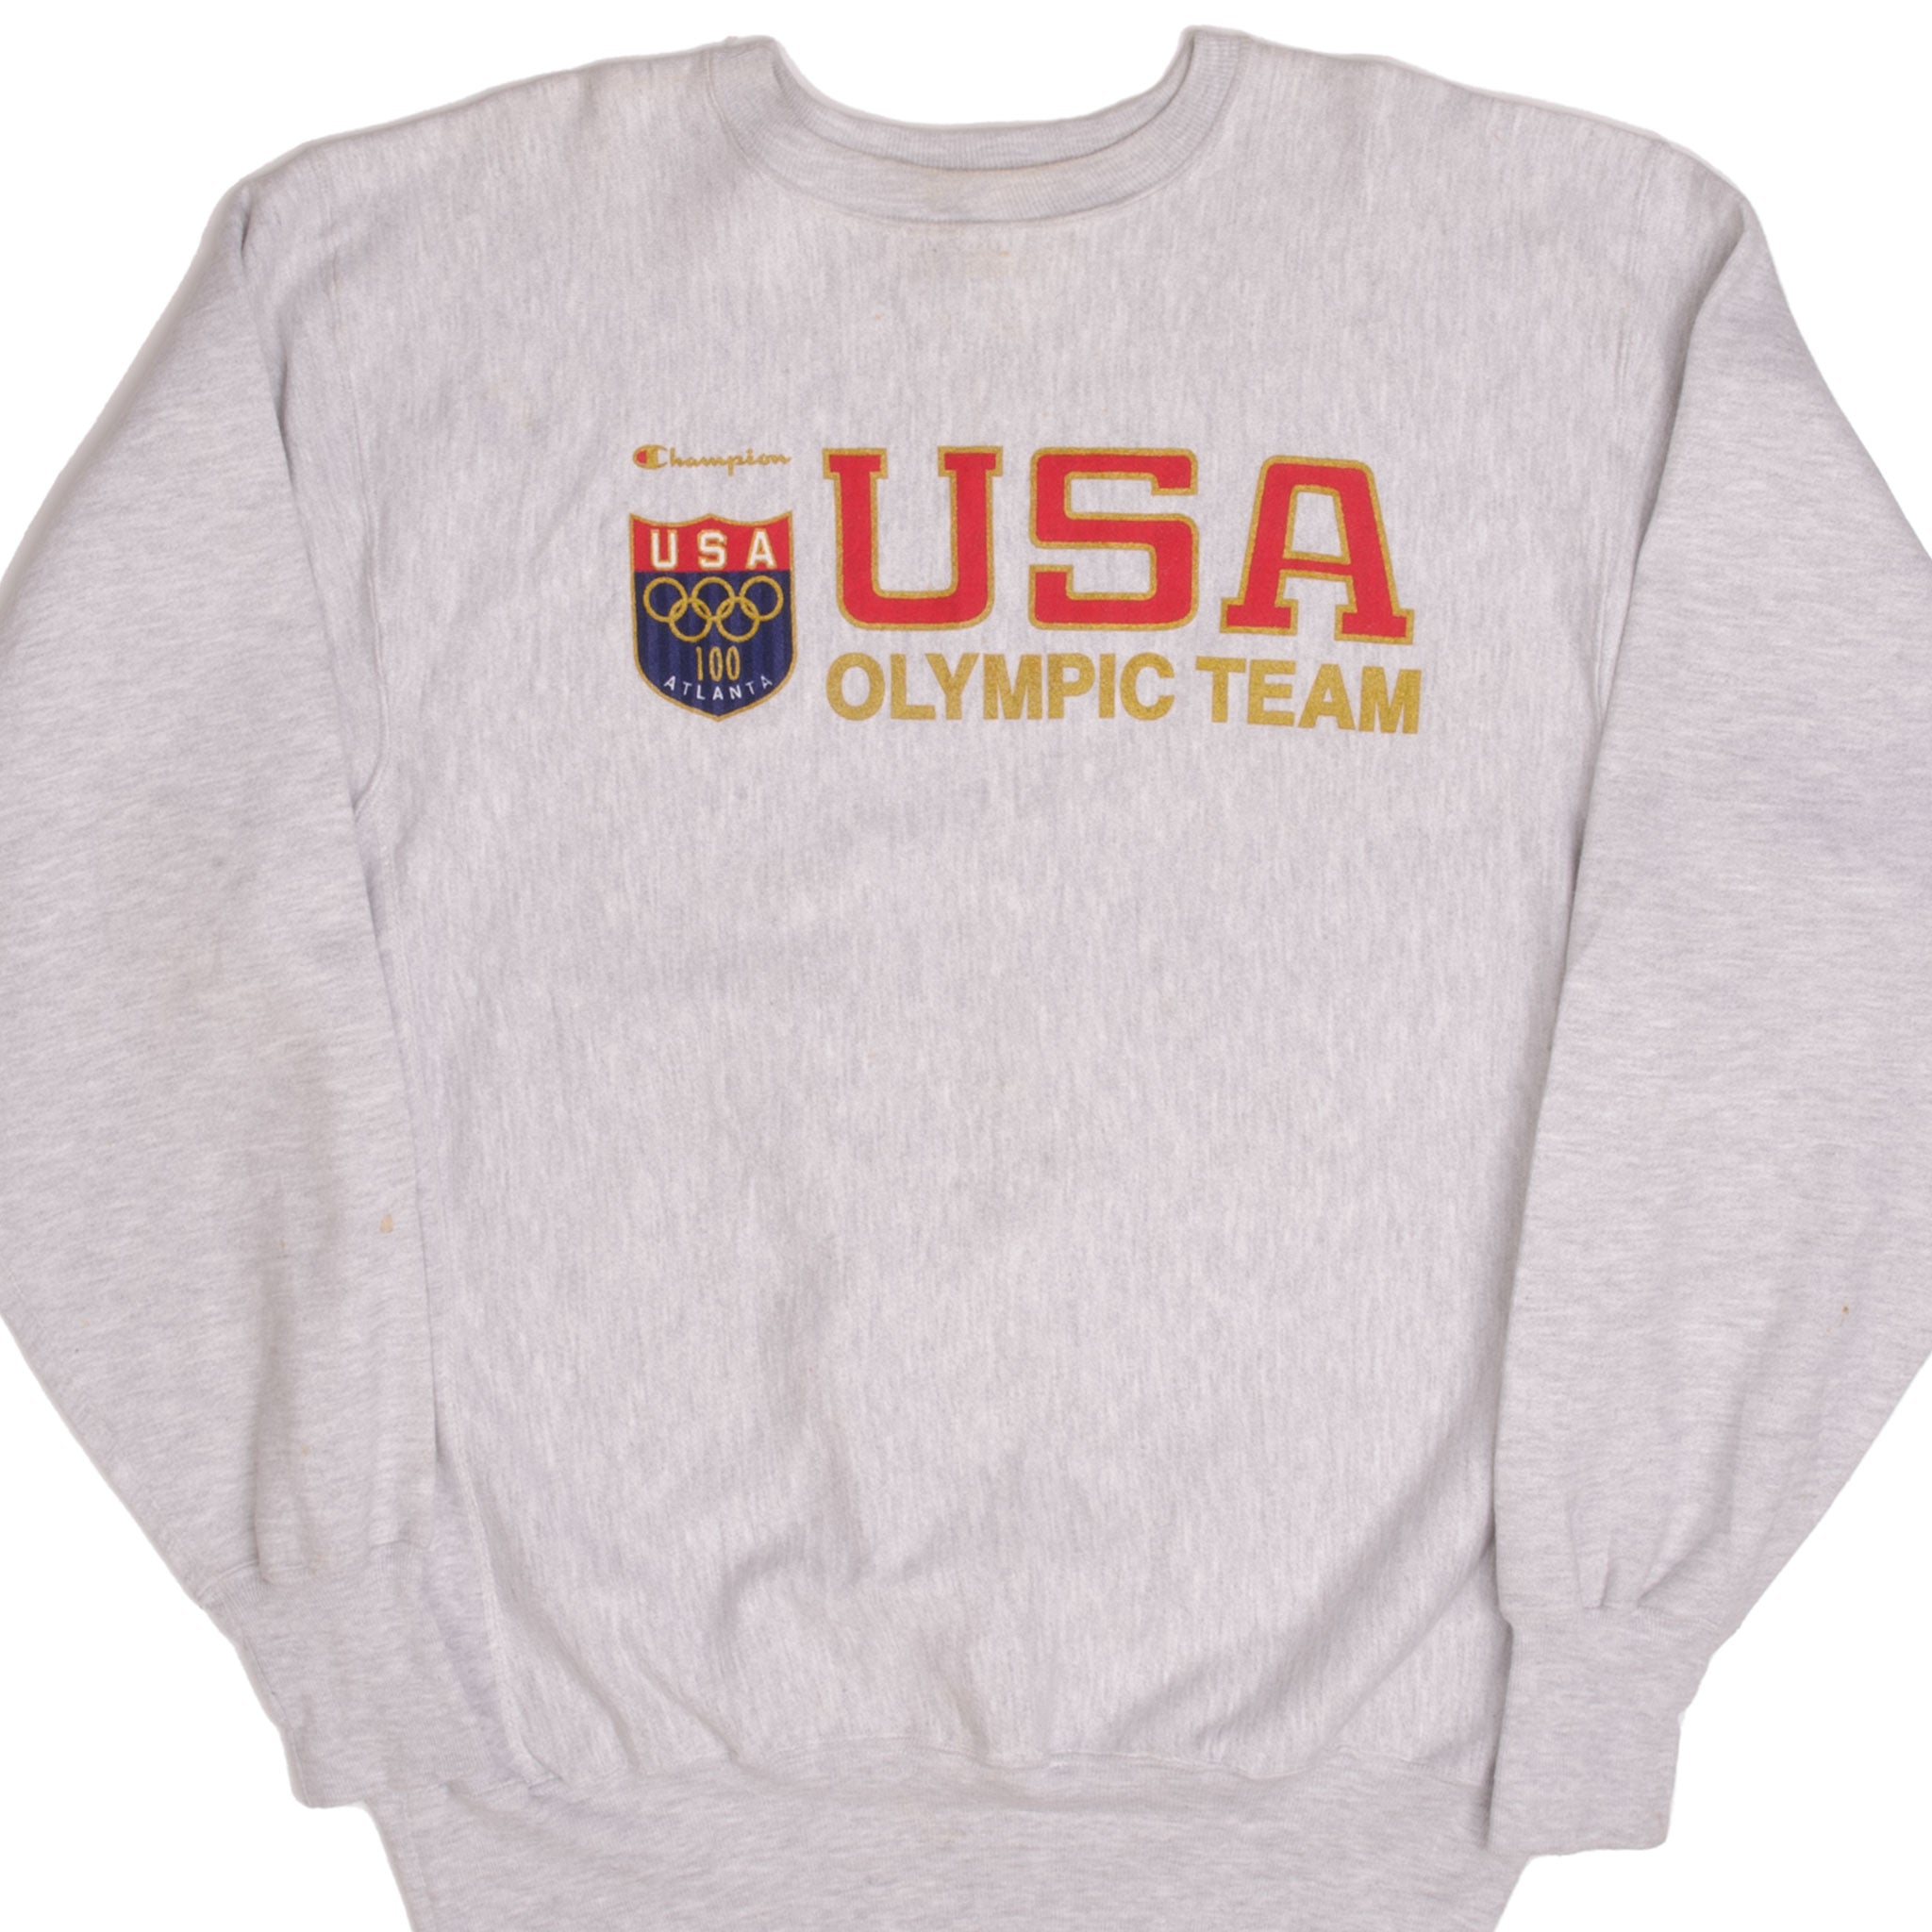 VINTAGE REVERSE WEAVE CHAMPION USA OLYMPIC TEAM SWEATSHIRT 1996 ...